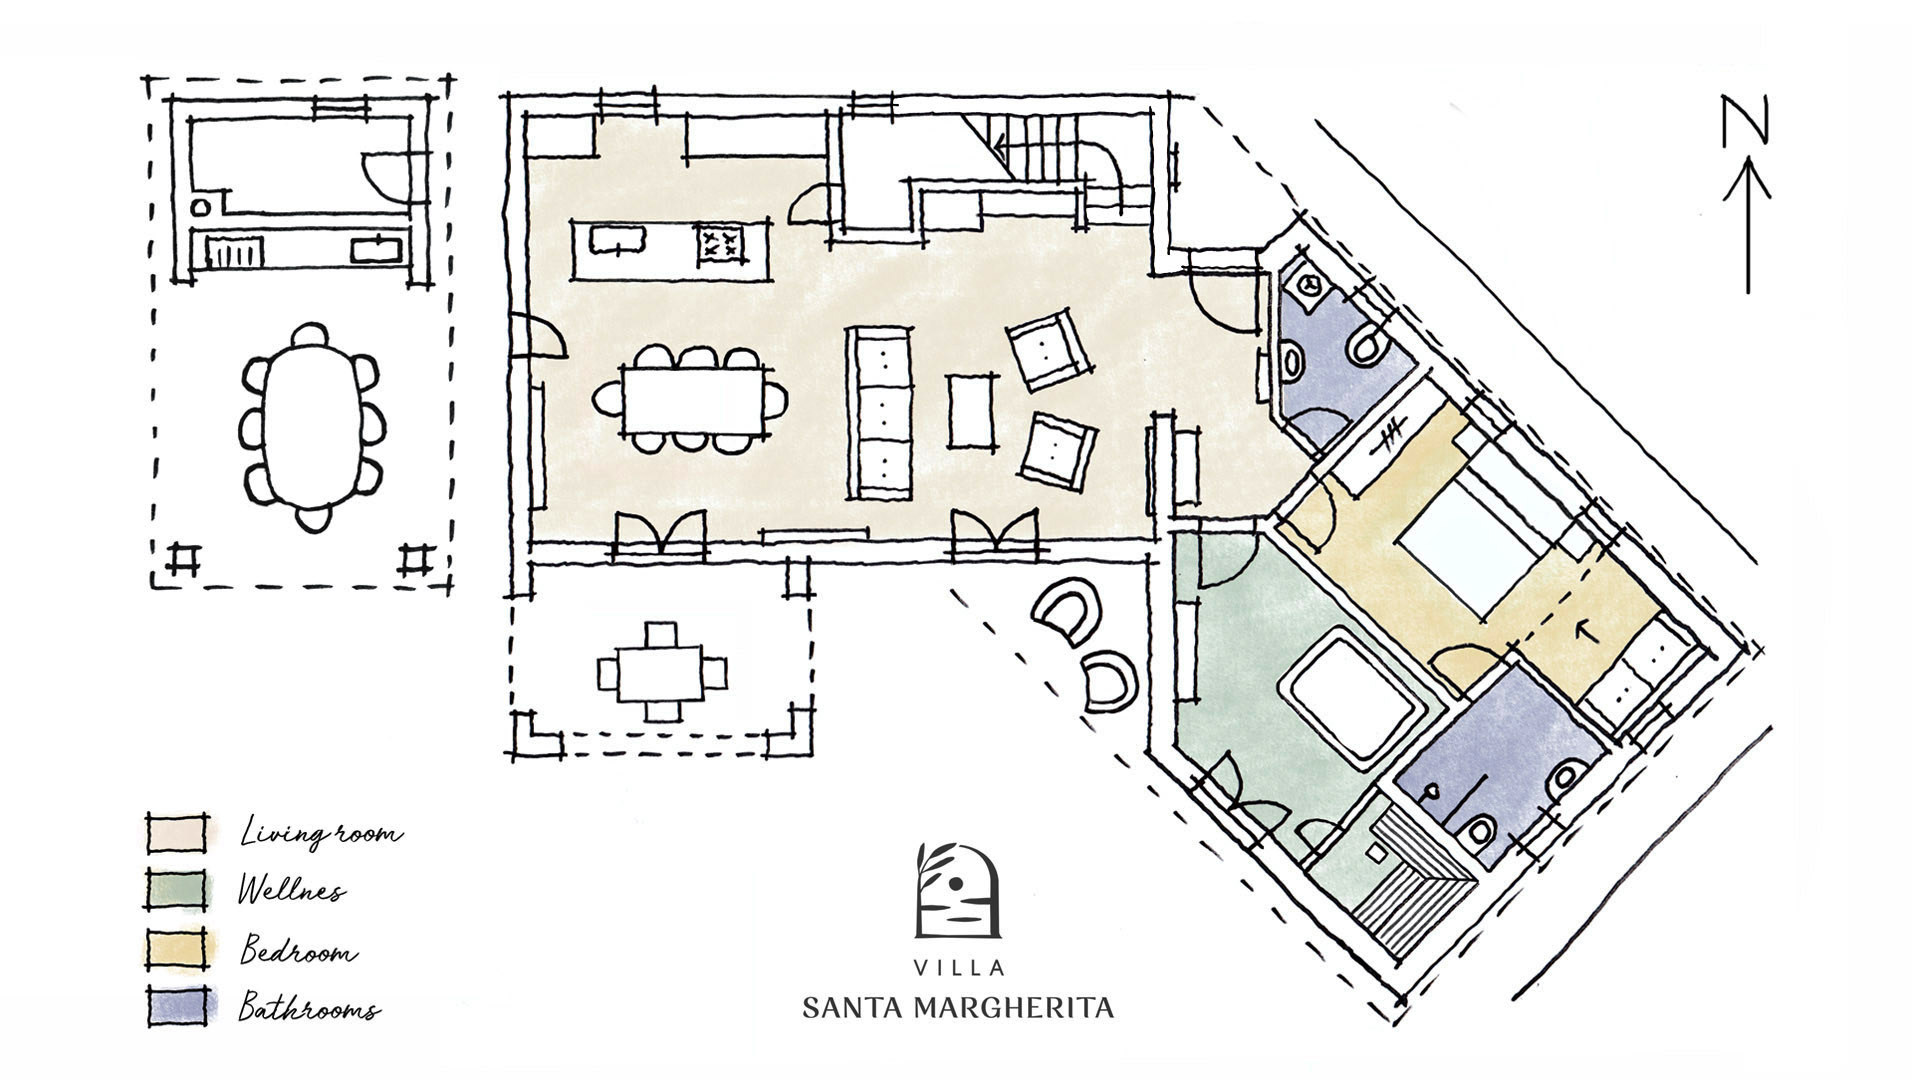 Ground Floor Plan - Villa Santa Margherita